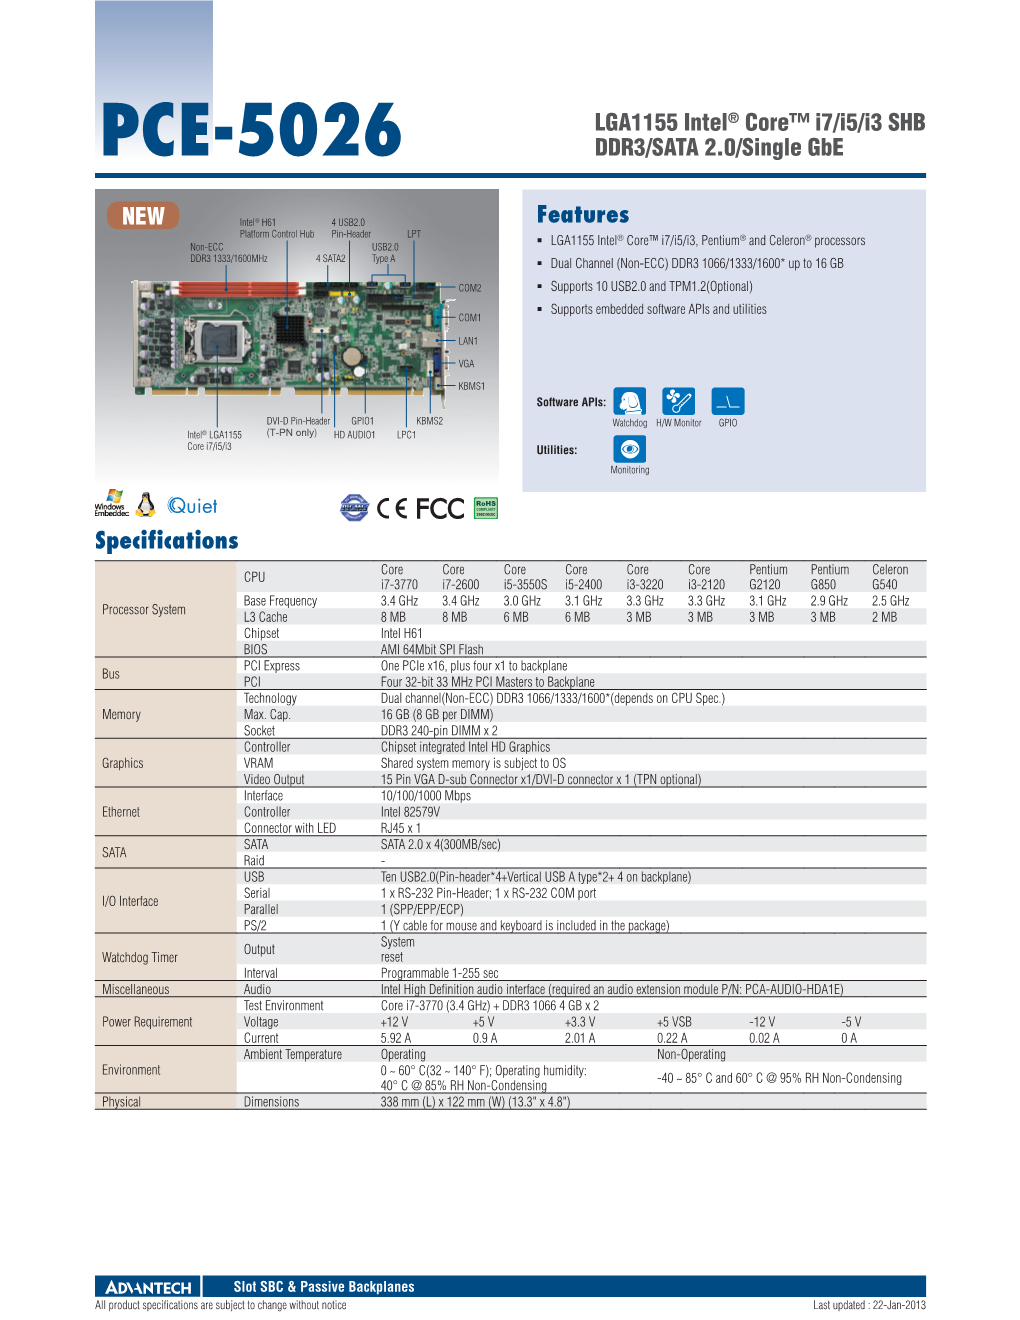 PCE-5026 DDR3/SATA 2.0/Single Gbe